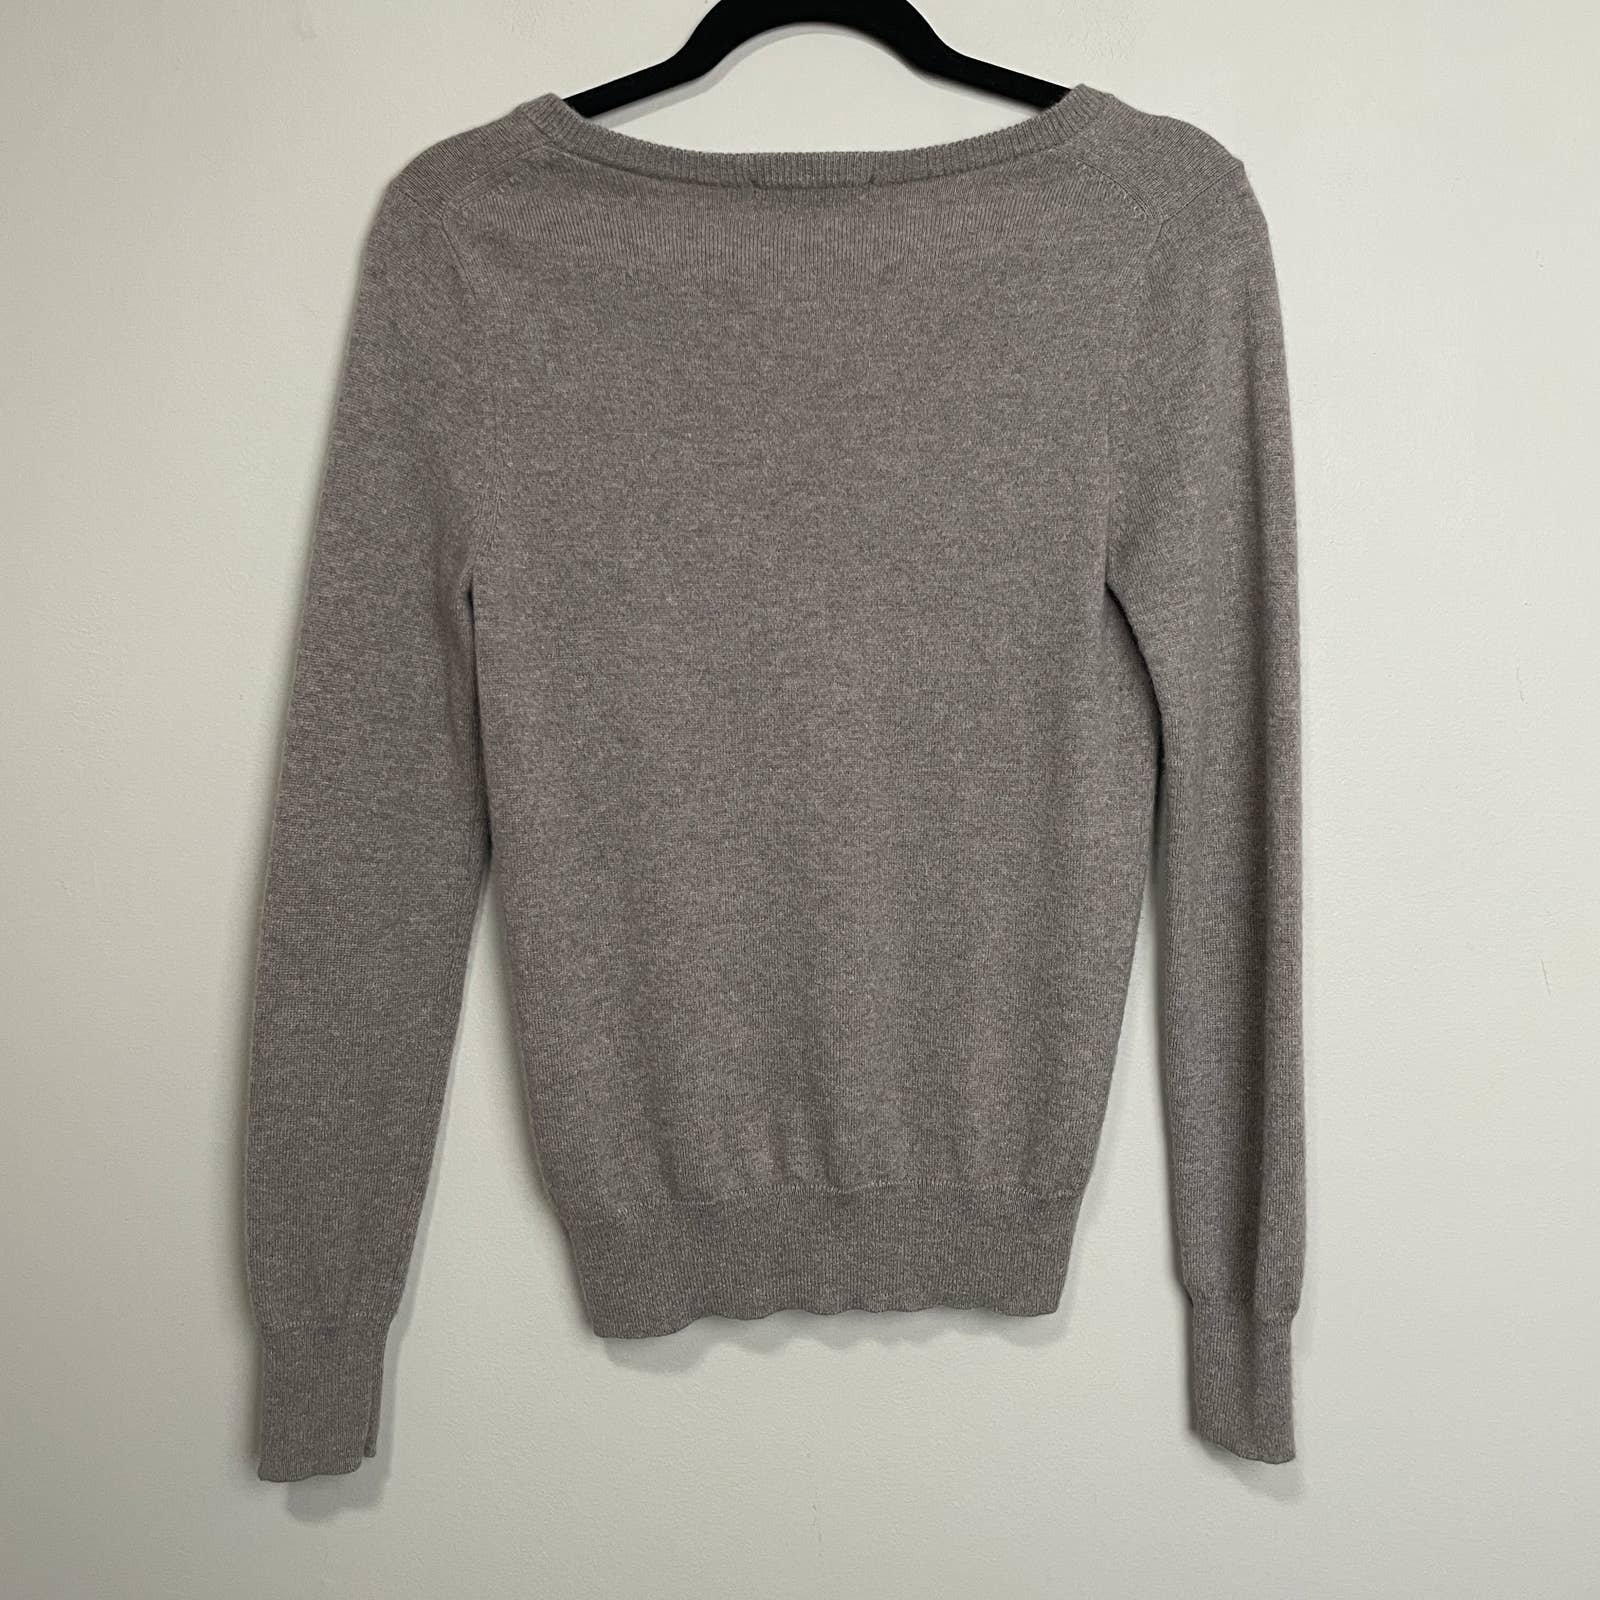 Buy Uniqlo Cashmere V Neck Long Sleeve Pull Over Sweater Brown Tan OJpnWSVgp Novel 